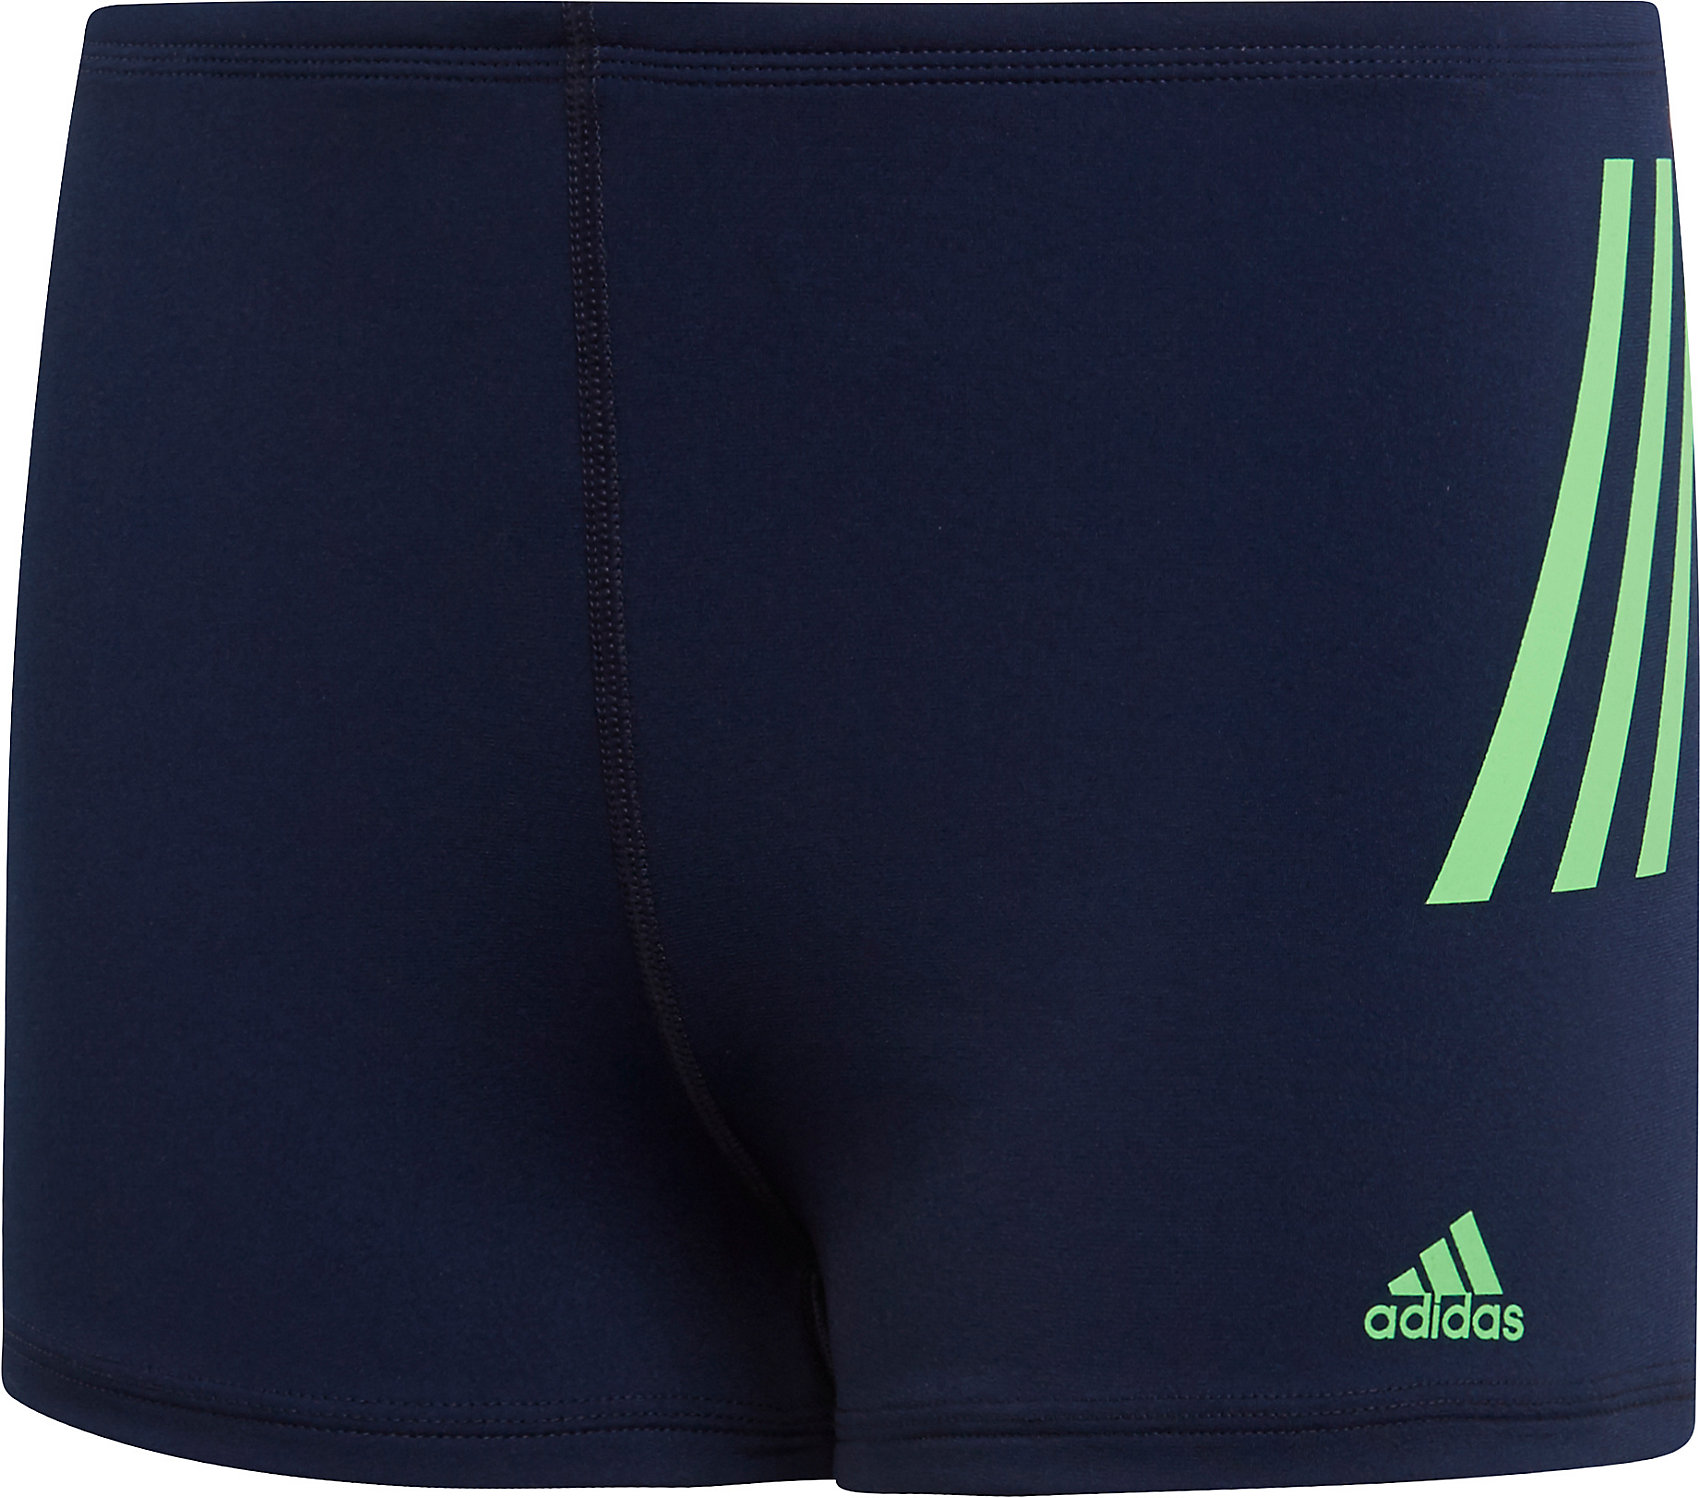 Плавки адидас. Adidas 3-Stripes Swim Boxers. Плавки adidas Fitness Boxer. Adidas шорты для плавания Tiger CLX VSL. Adidas Swim shorts for boys.